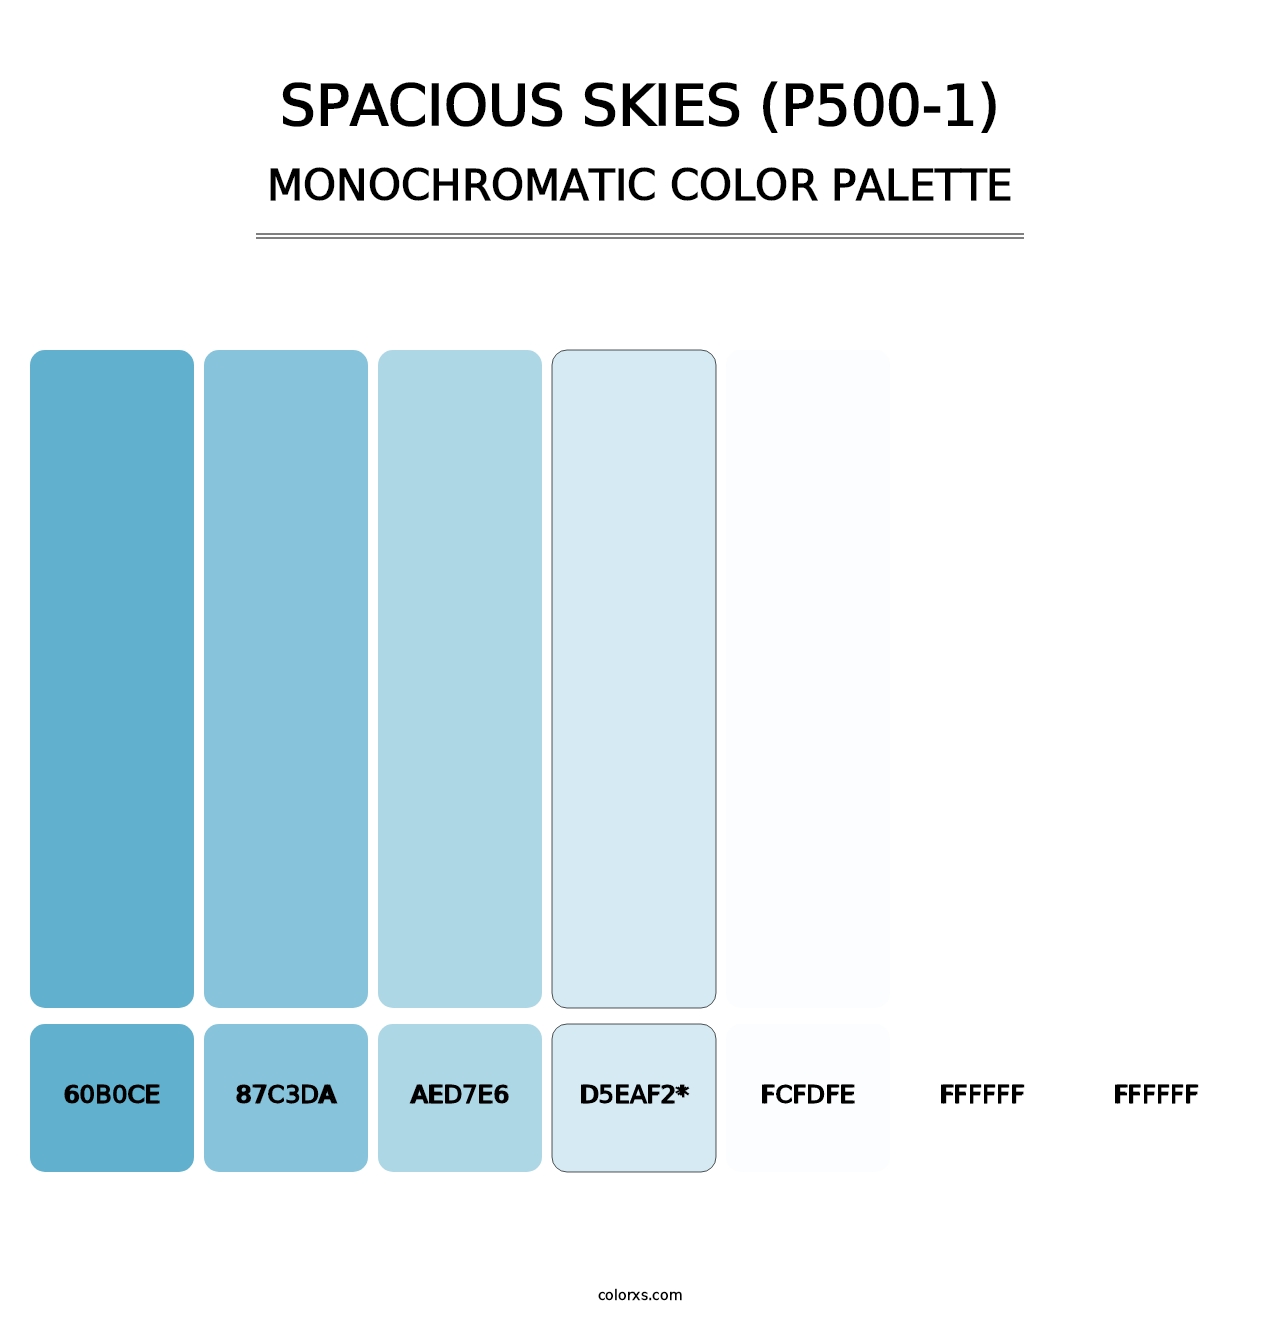 Spacious Skies (P500-1) - Monochromatic Color Palette